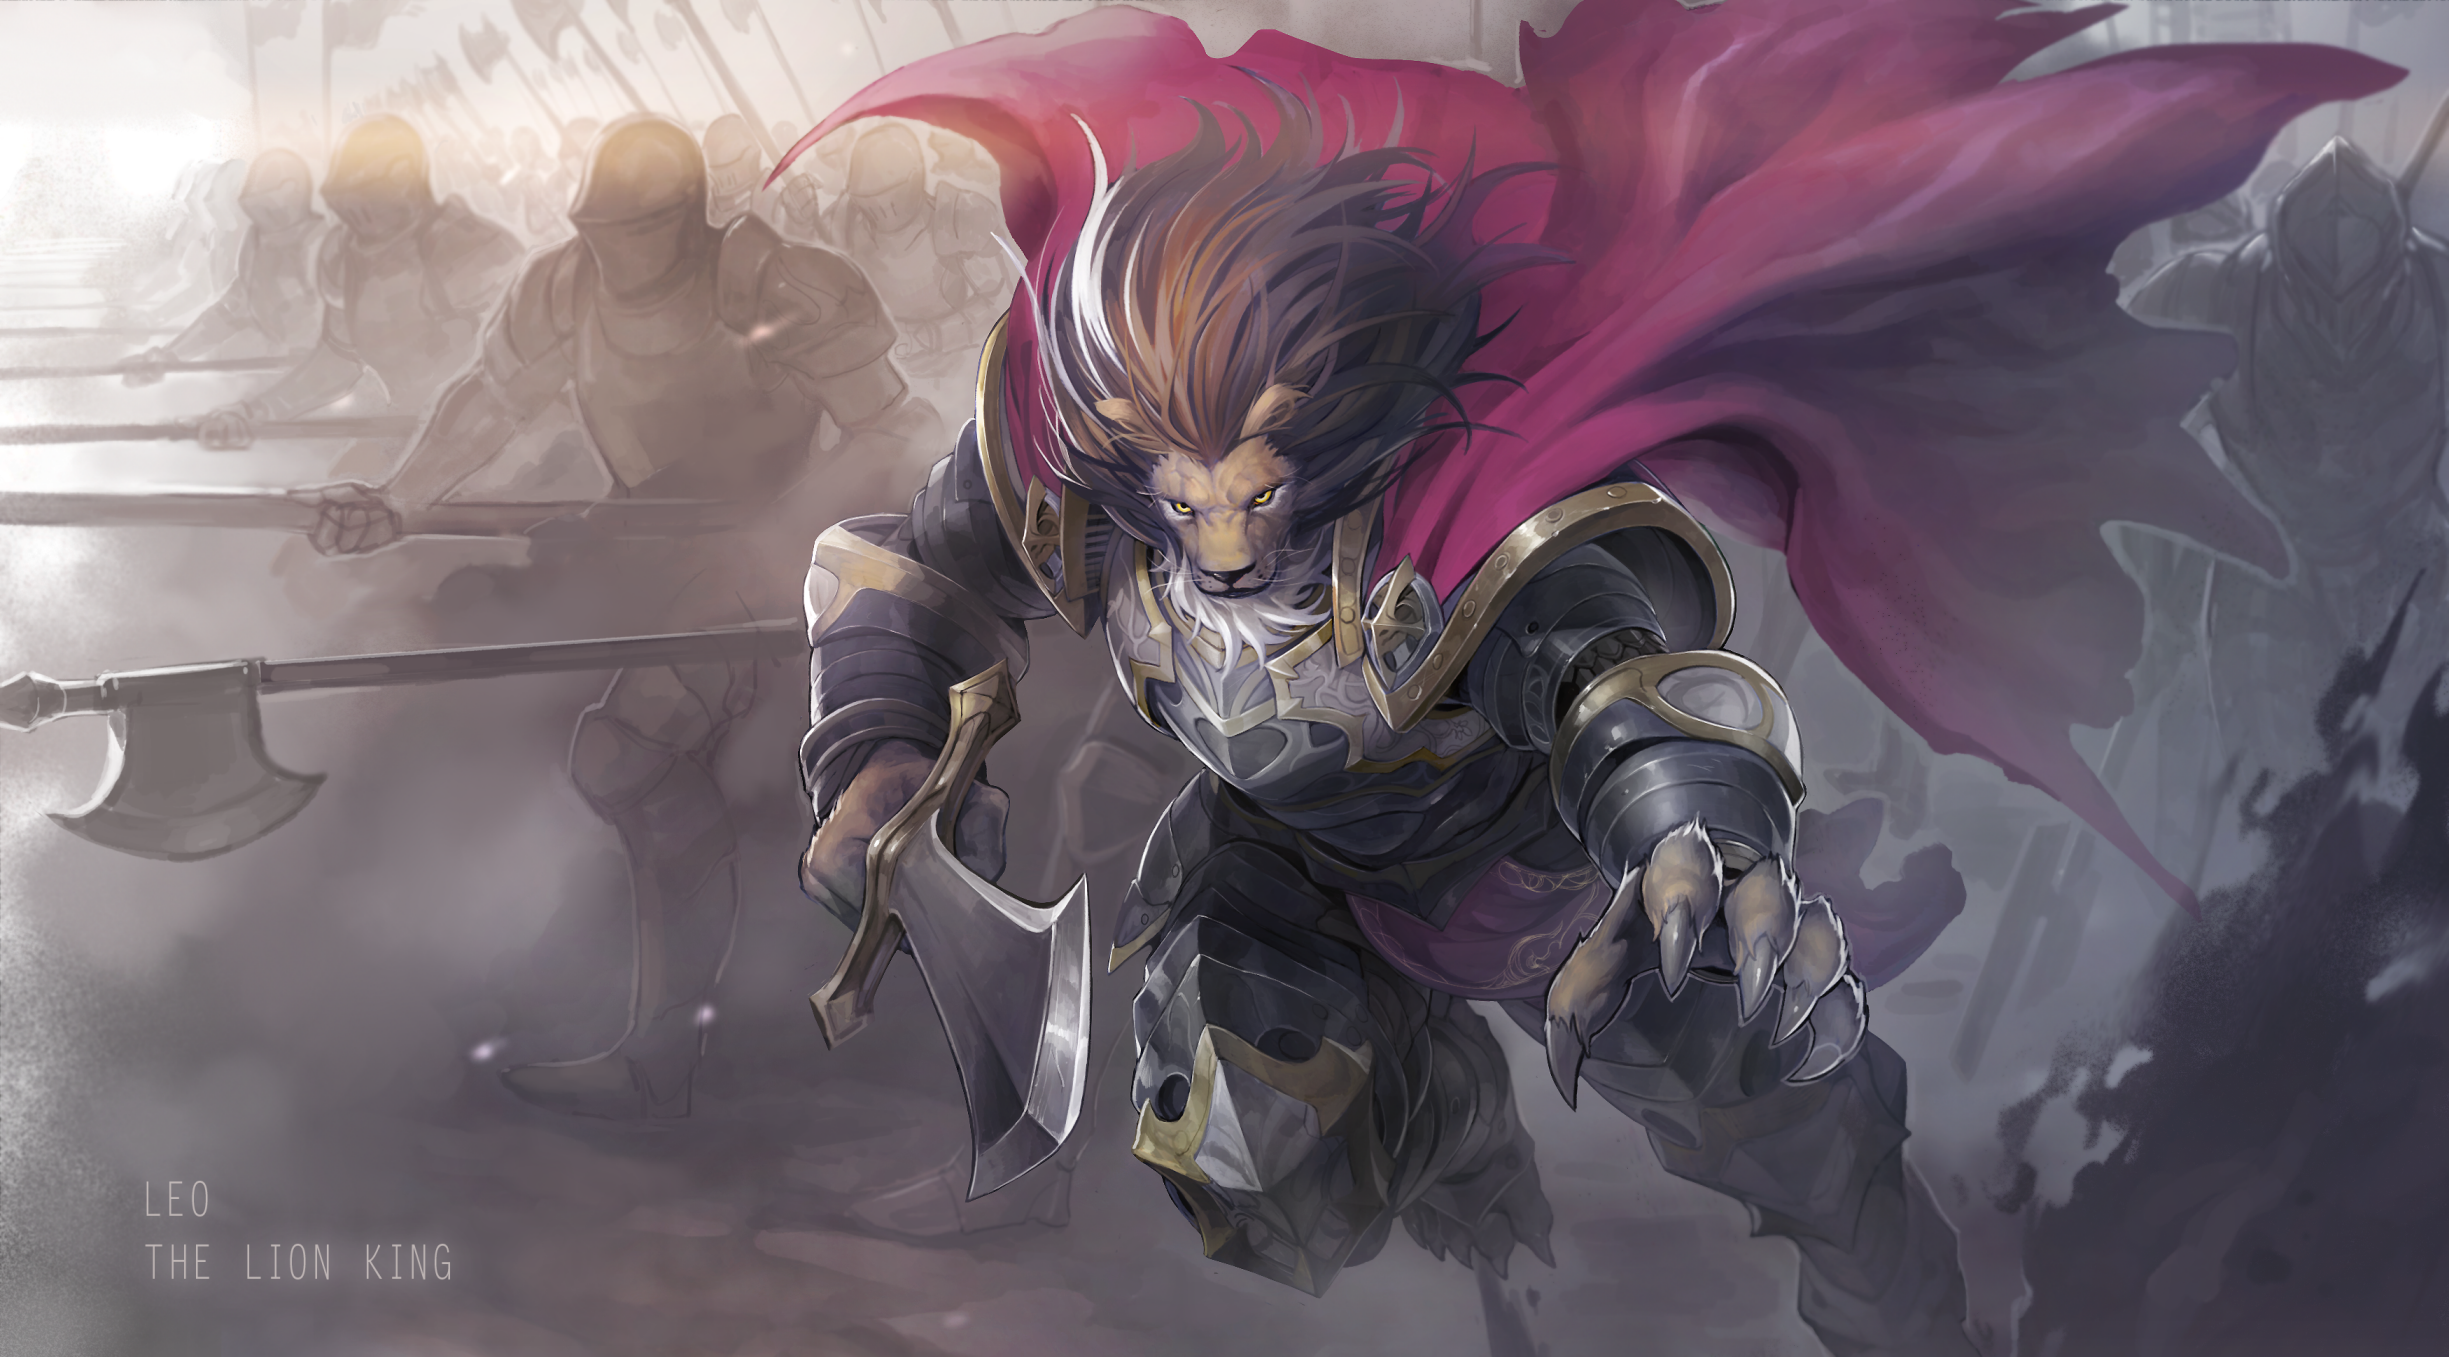 Leo the lion king. Anime, Anime knight, HD anime wallpaper